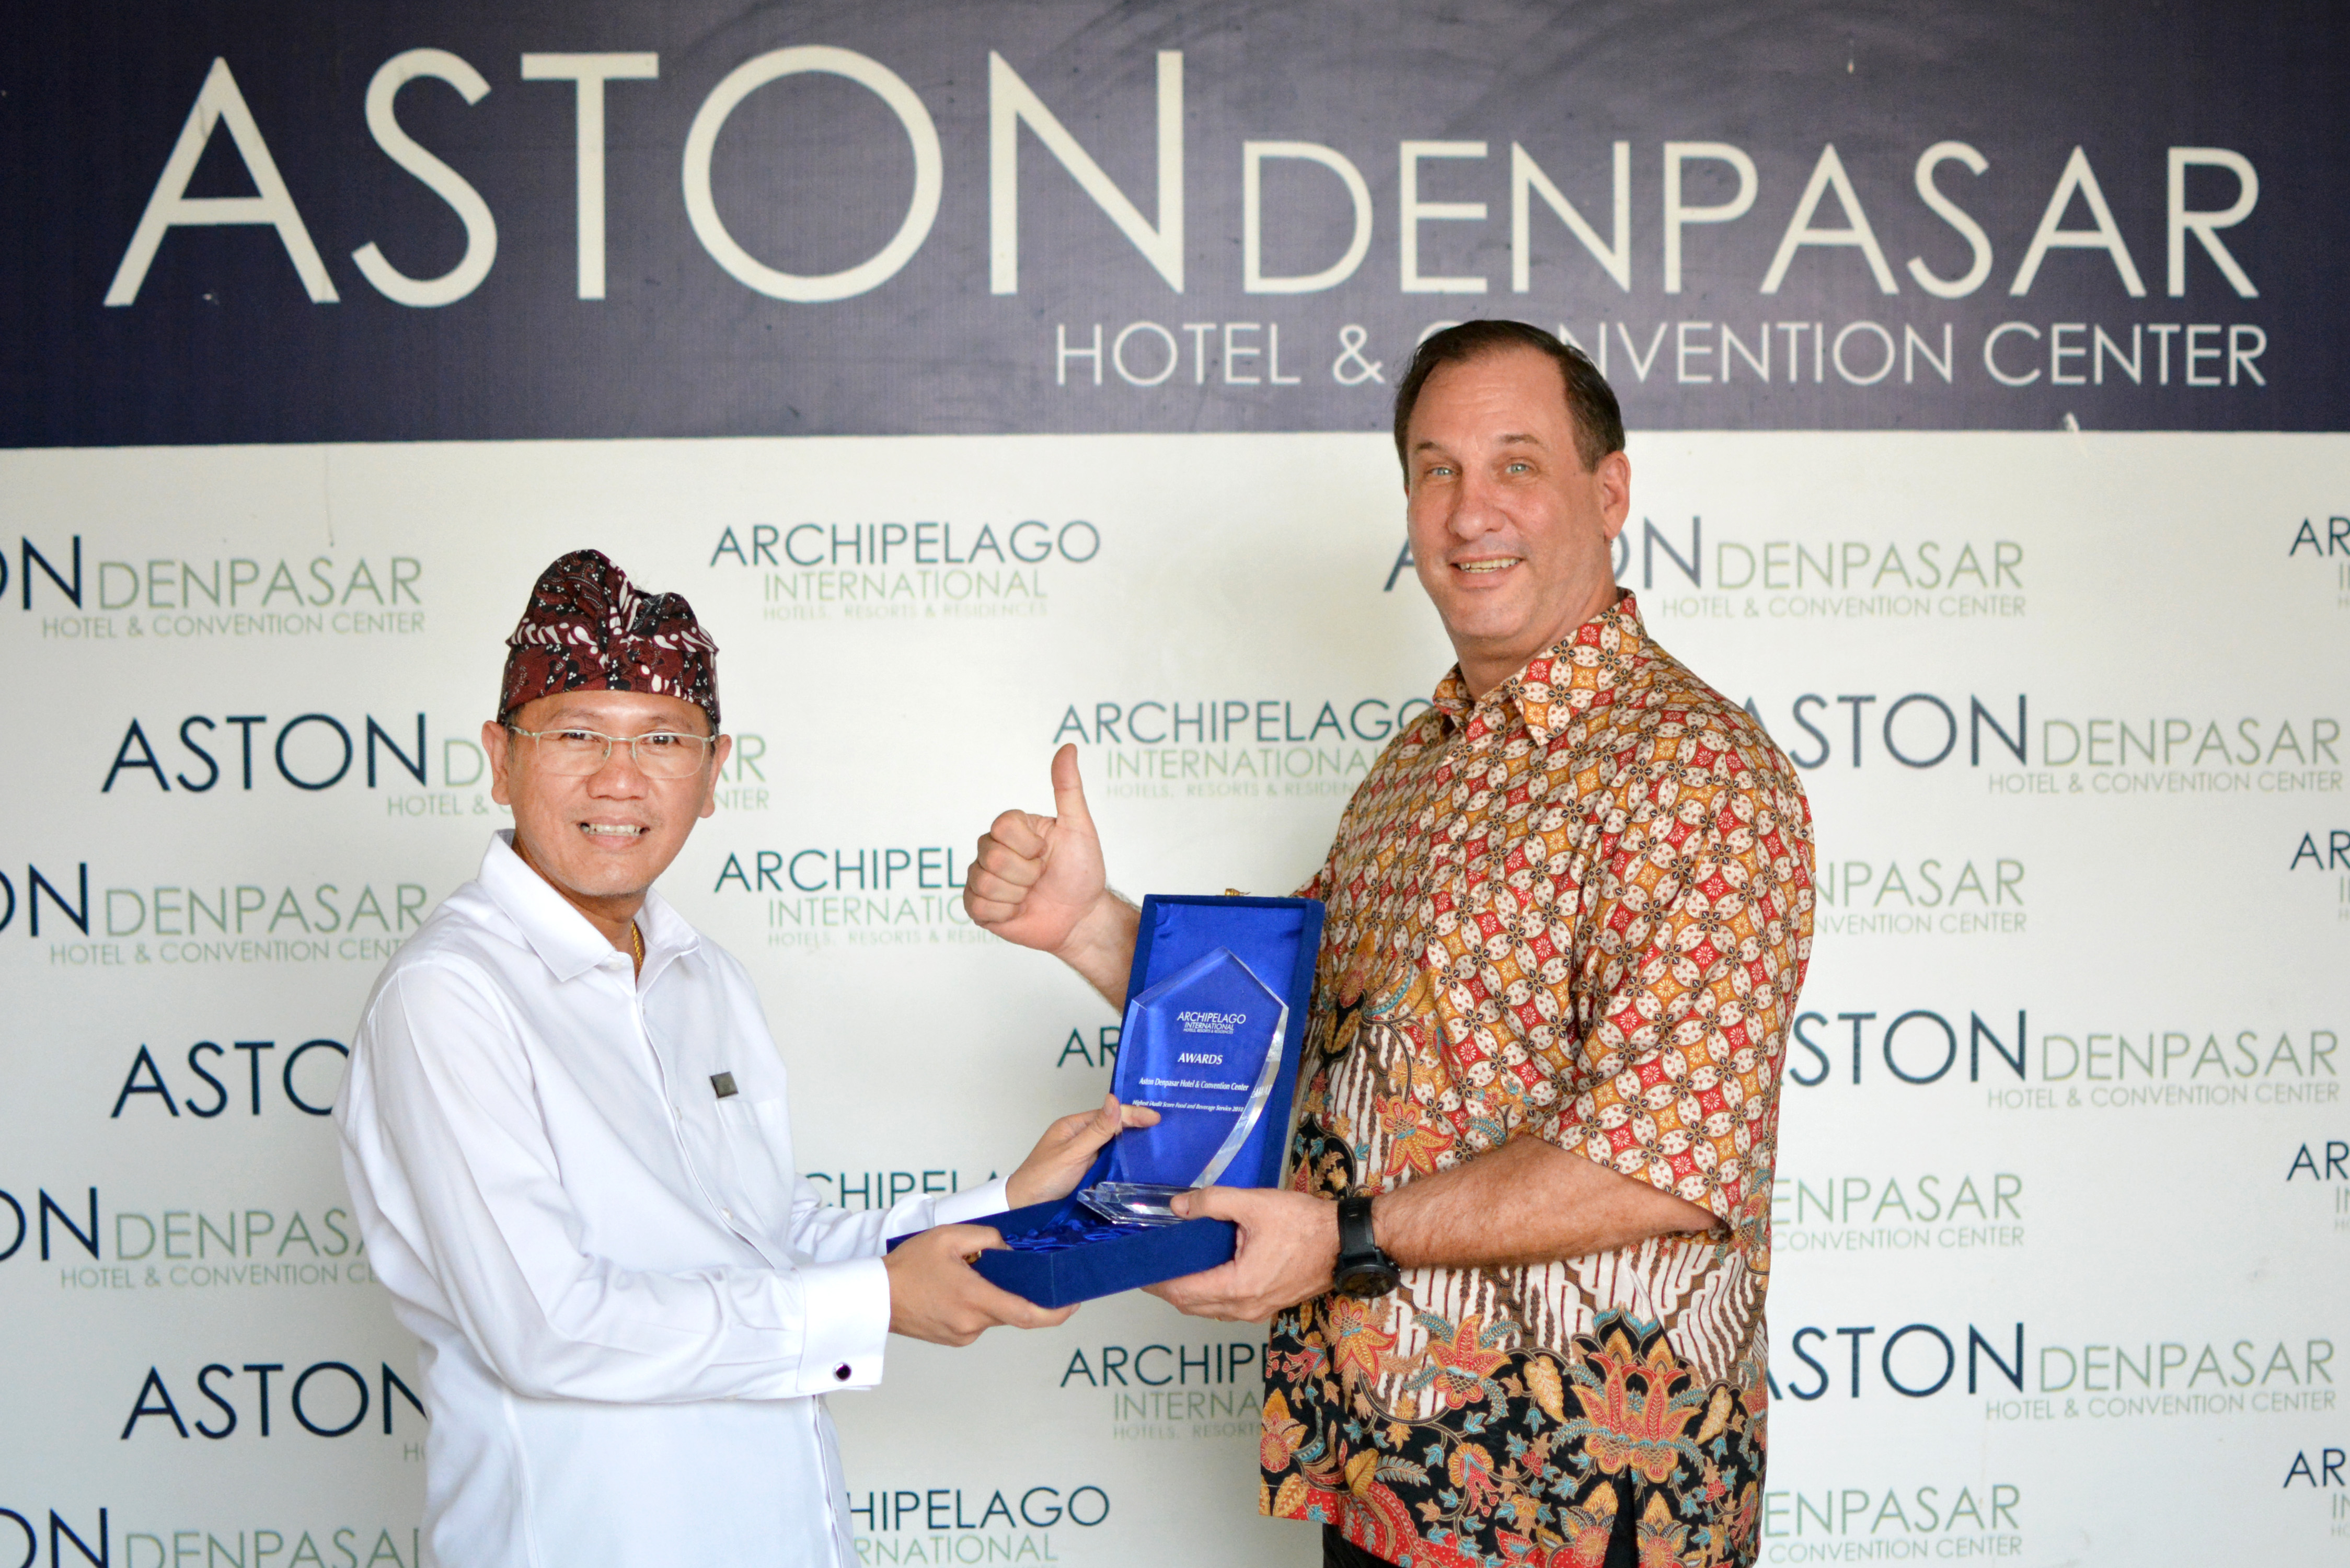 Aston Denpasar Hotel & Convention Center Raih Penghargaan ‘Audit Food & Beverage Service 2018’/istimewa